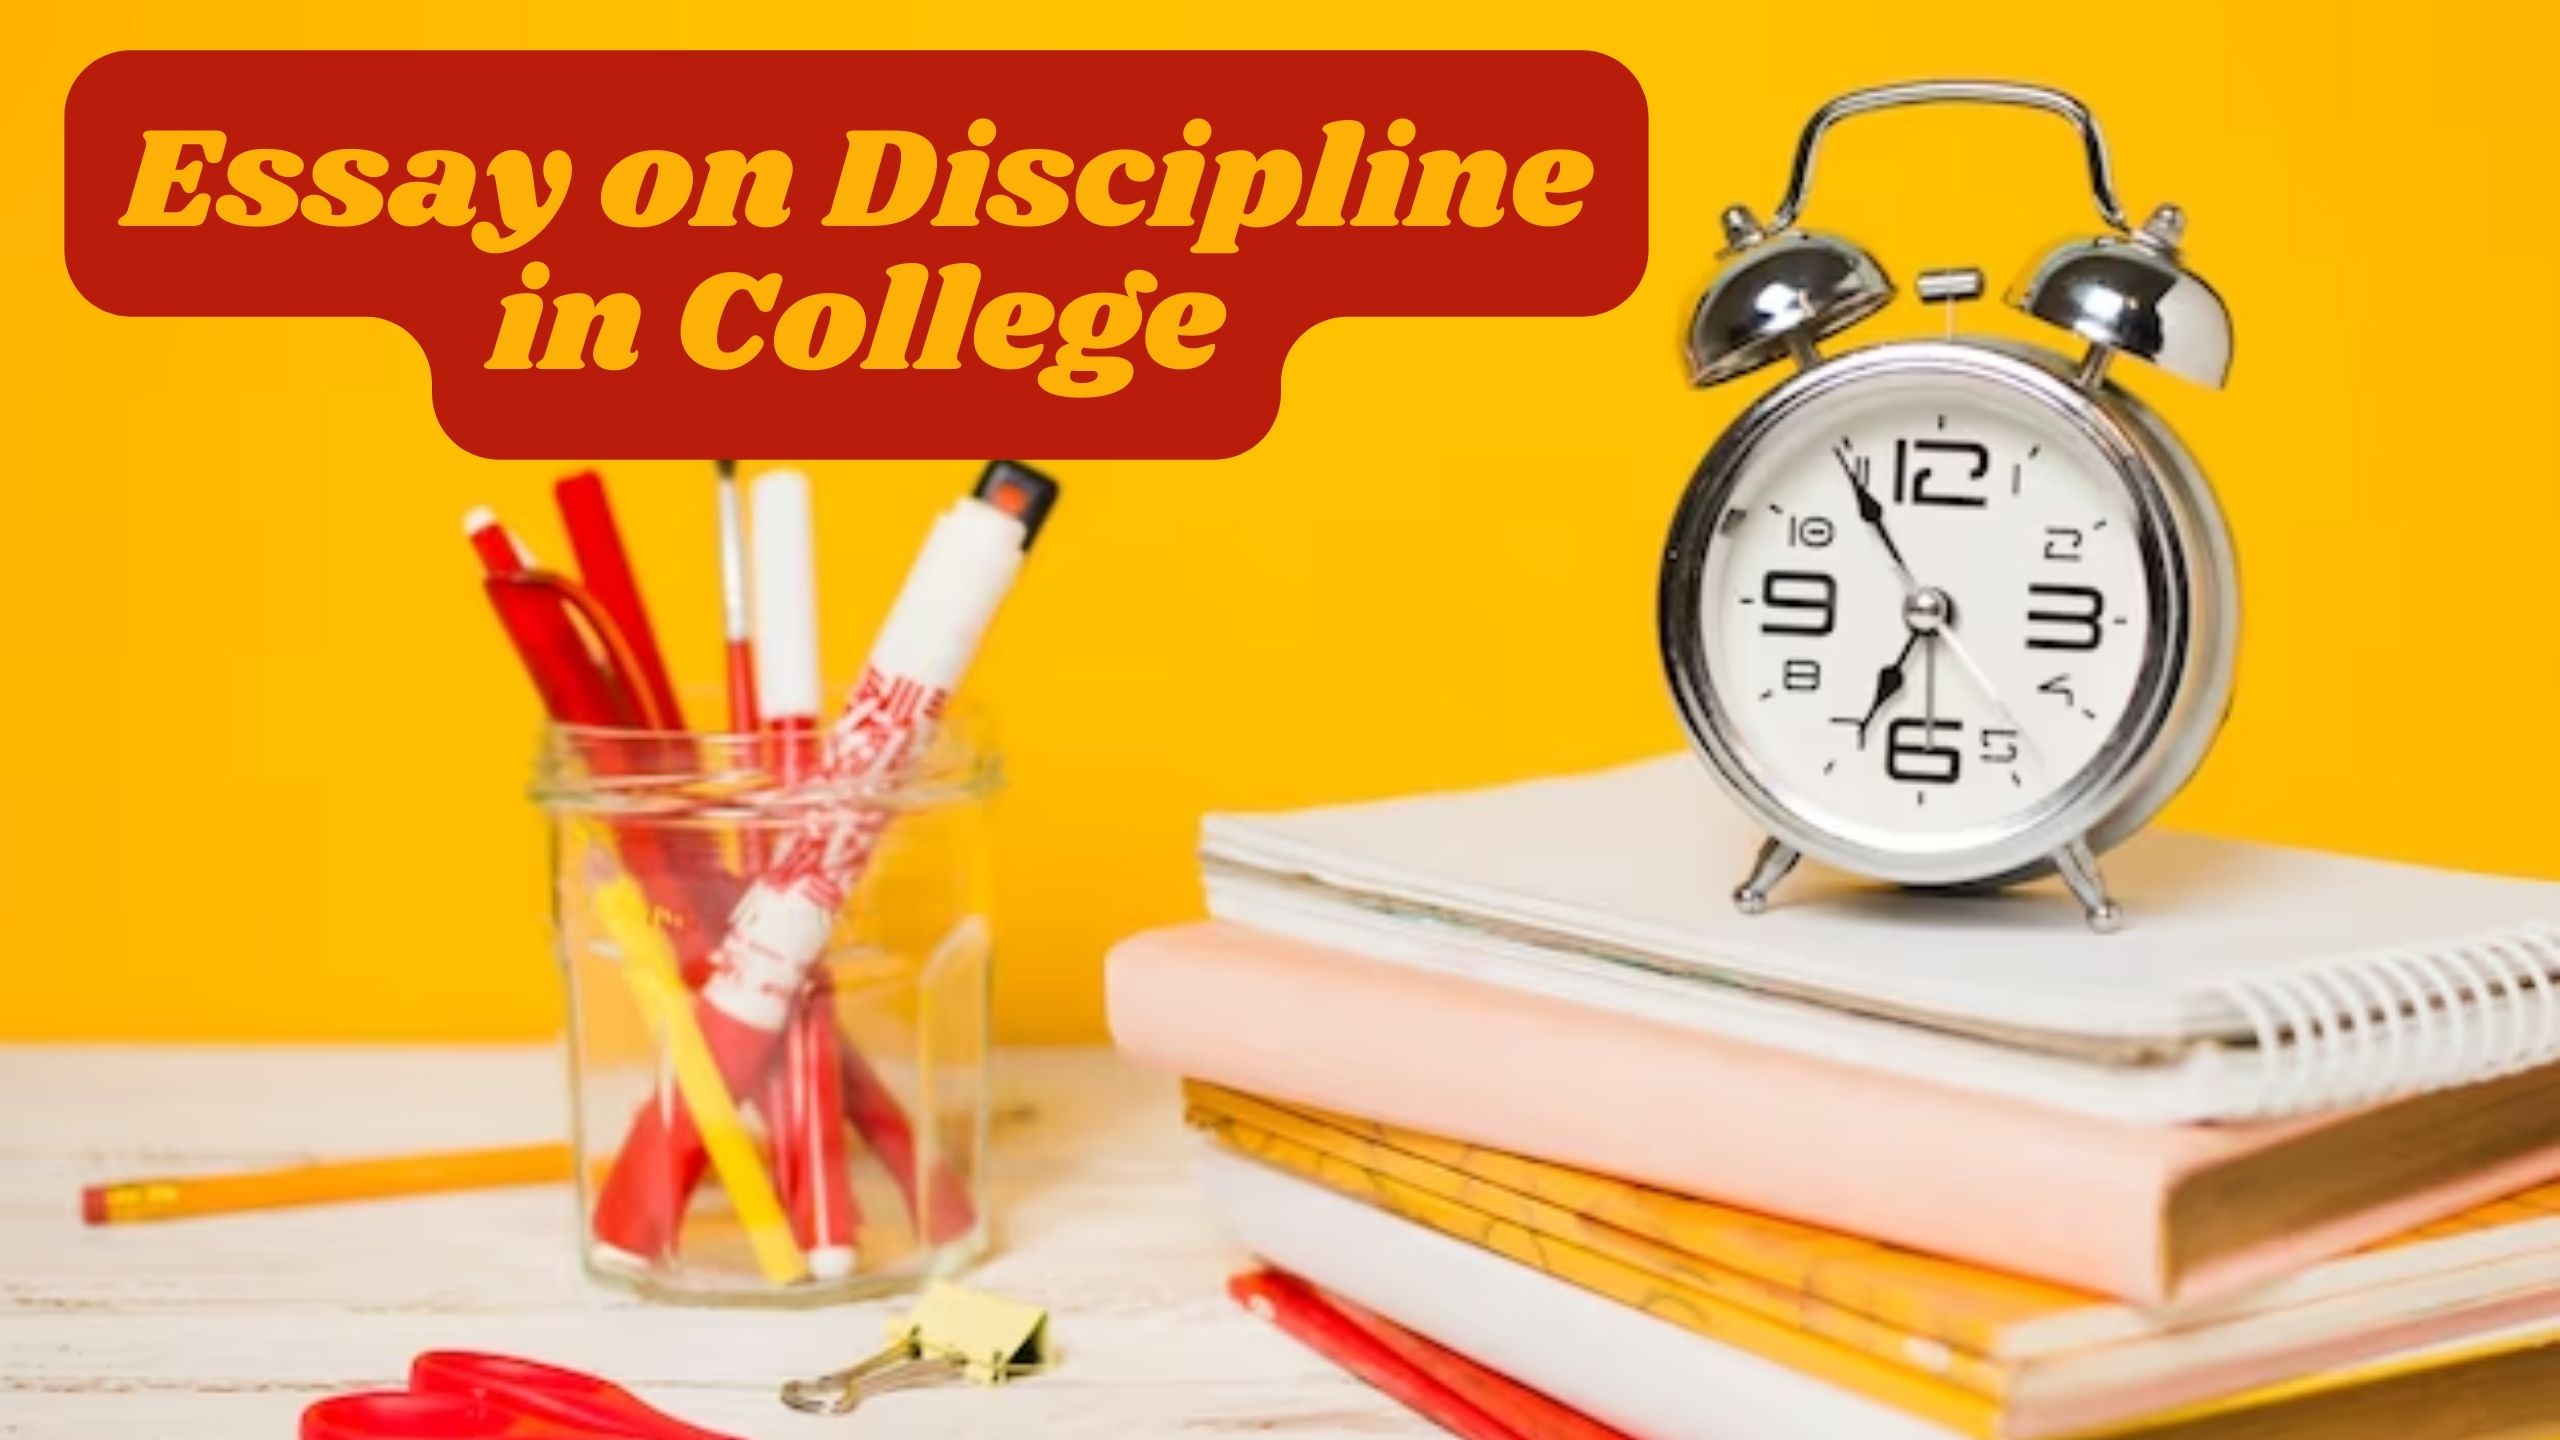 Essay on Discipline in College